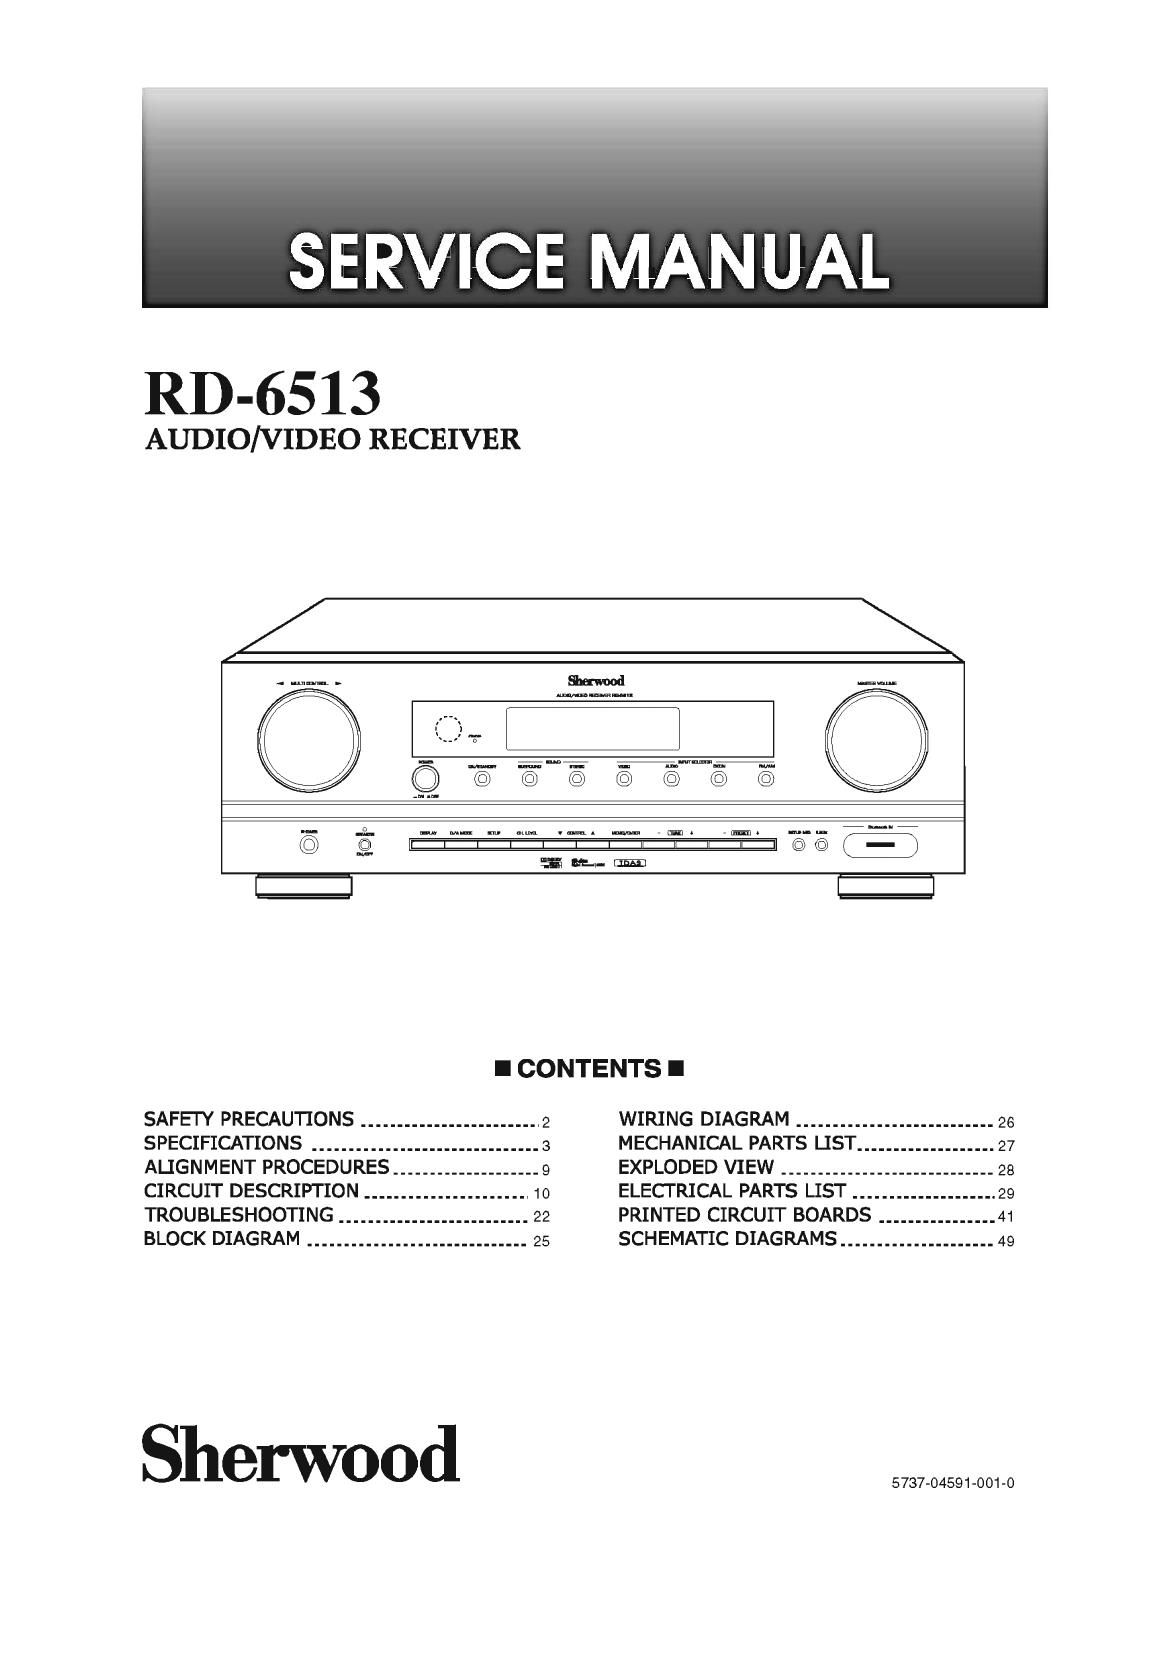 Sherwood RD 6513 Service Manual